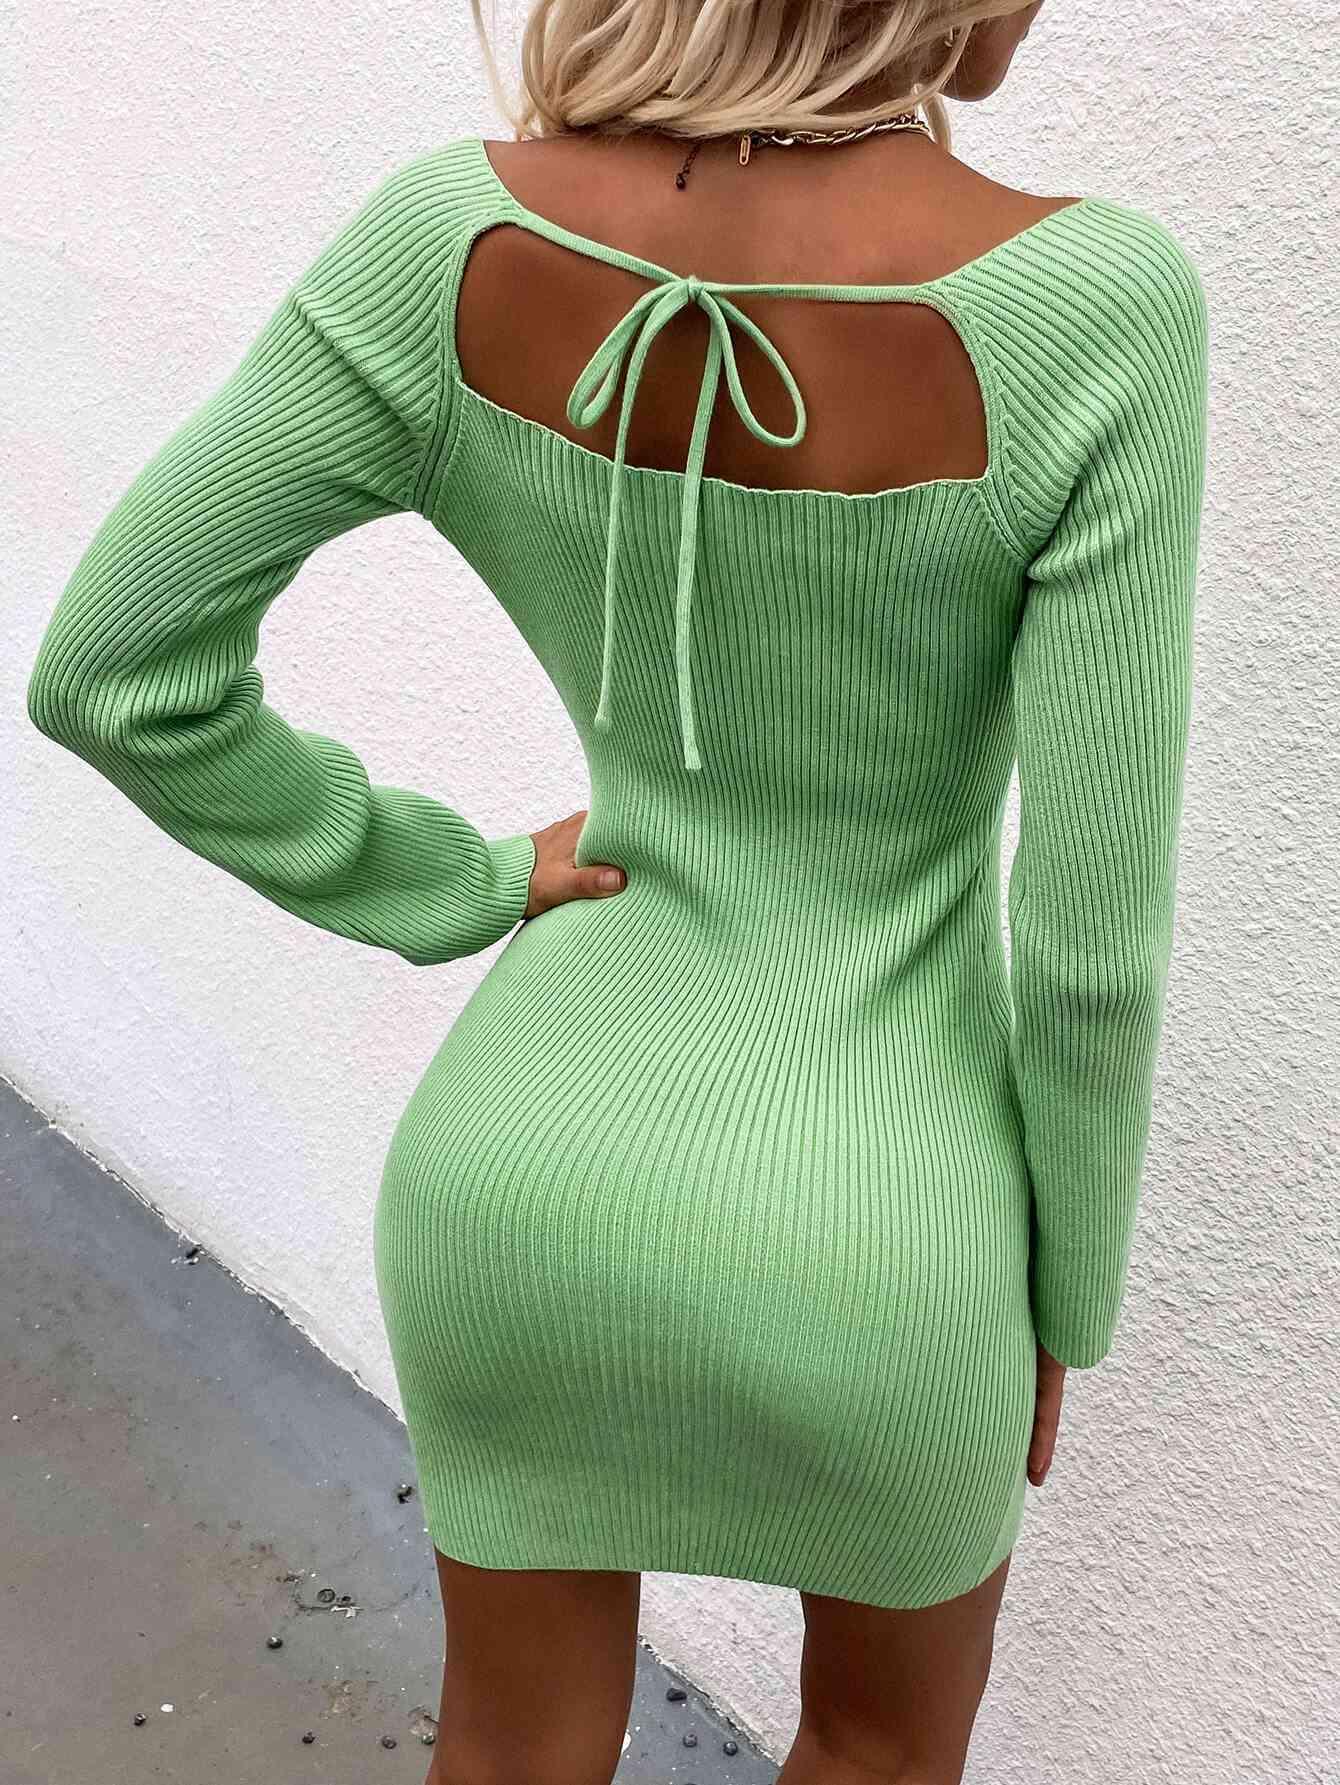 Regency Fashion Inspired Square Neck Sweater Dress-MXSTUDIO.COM